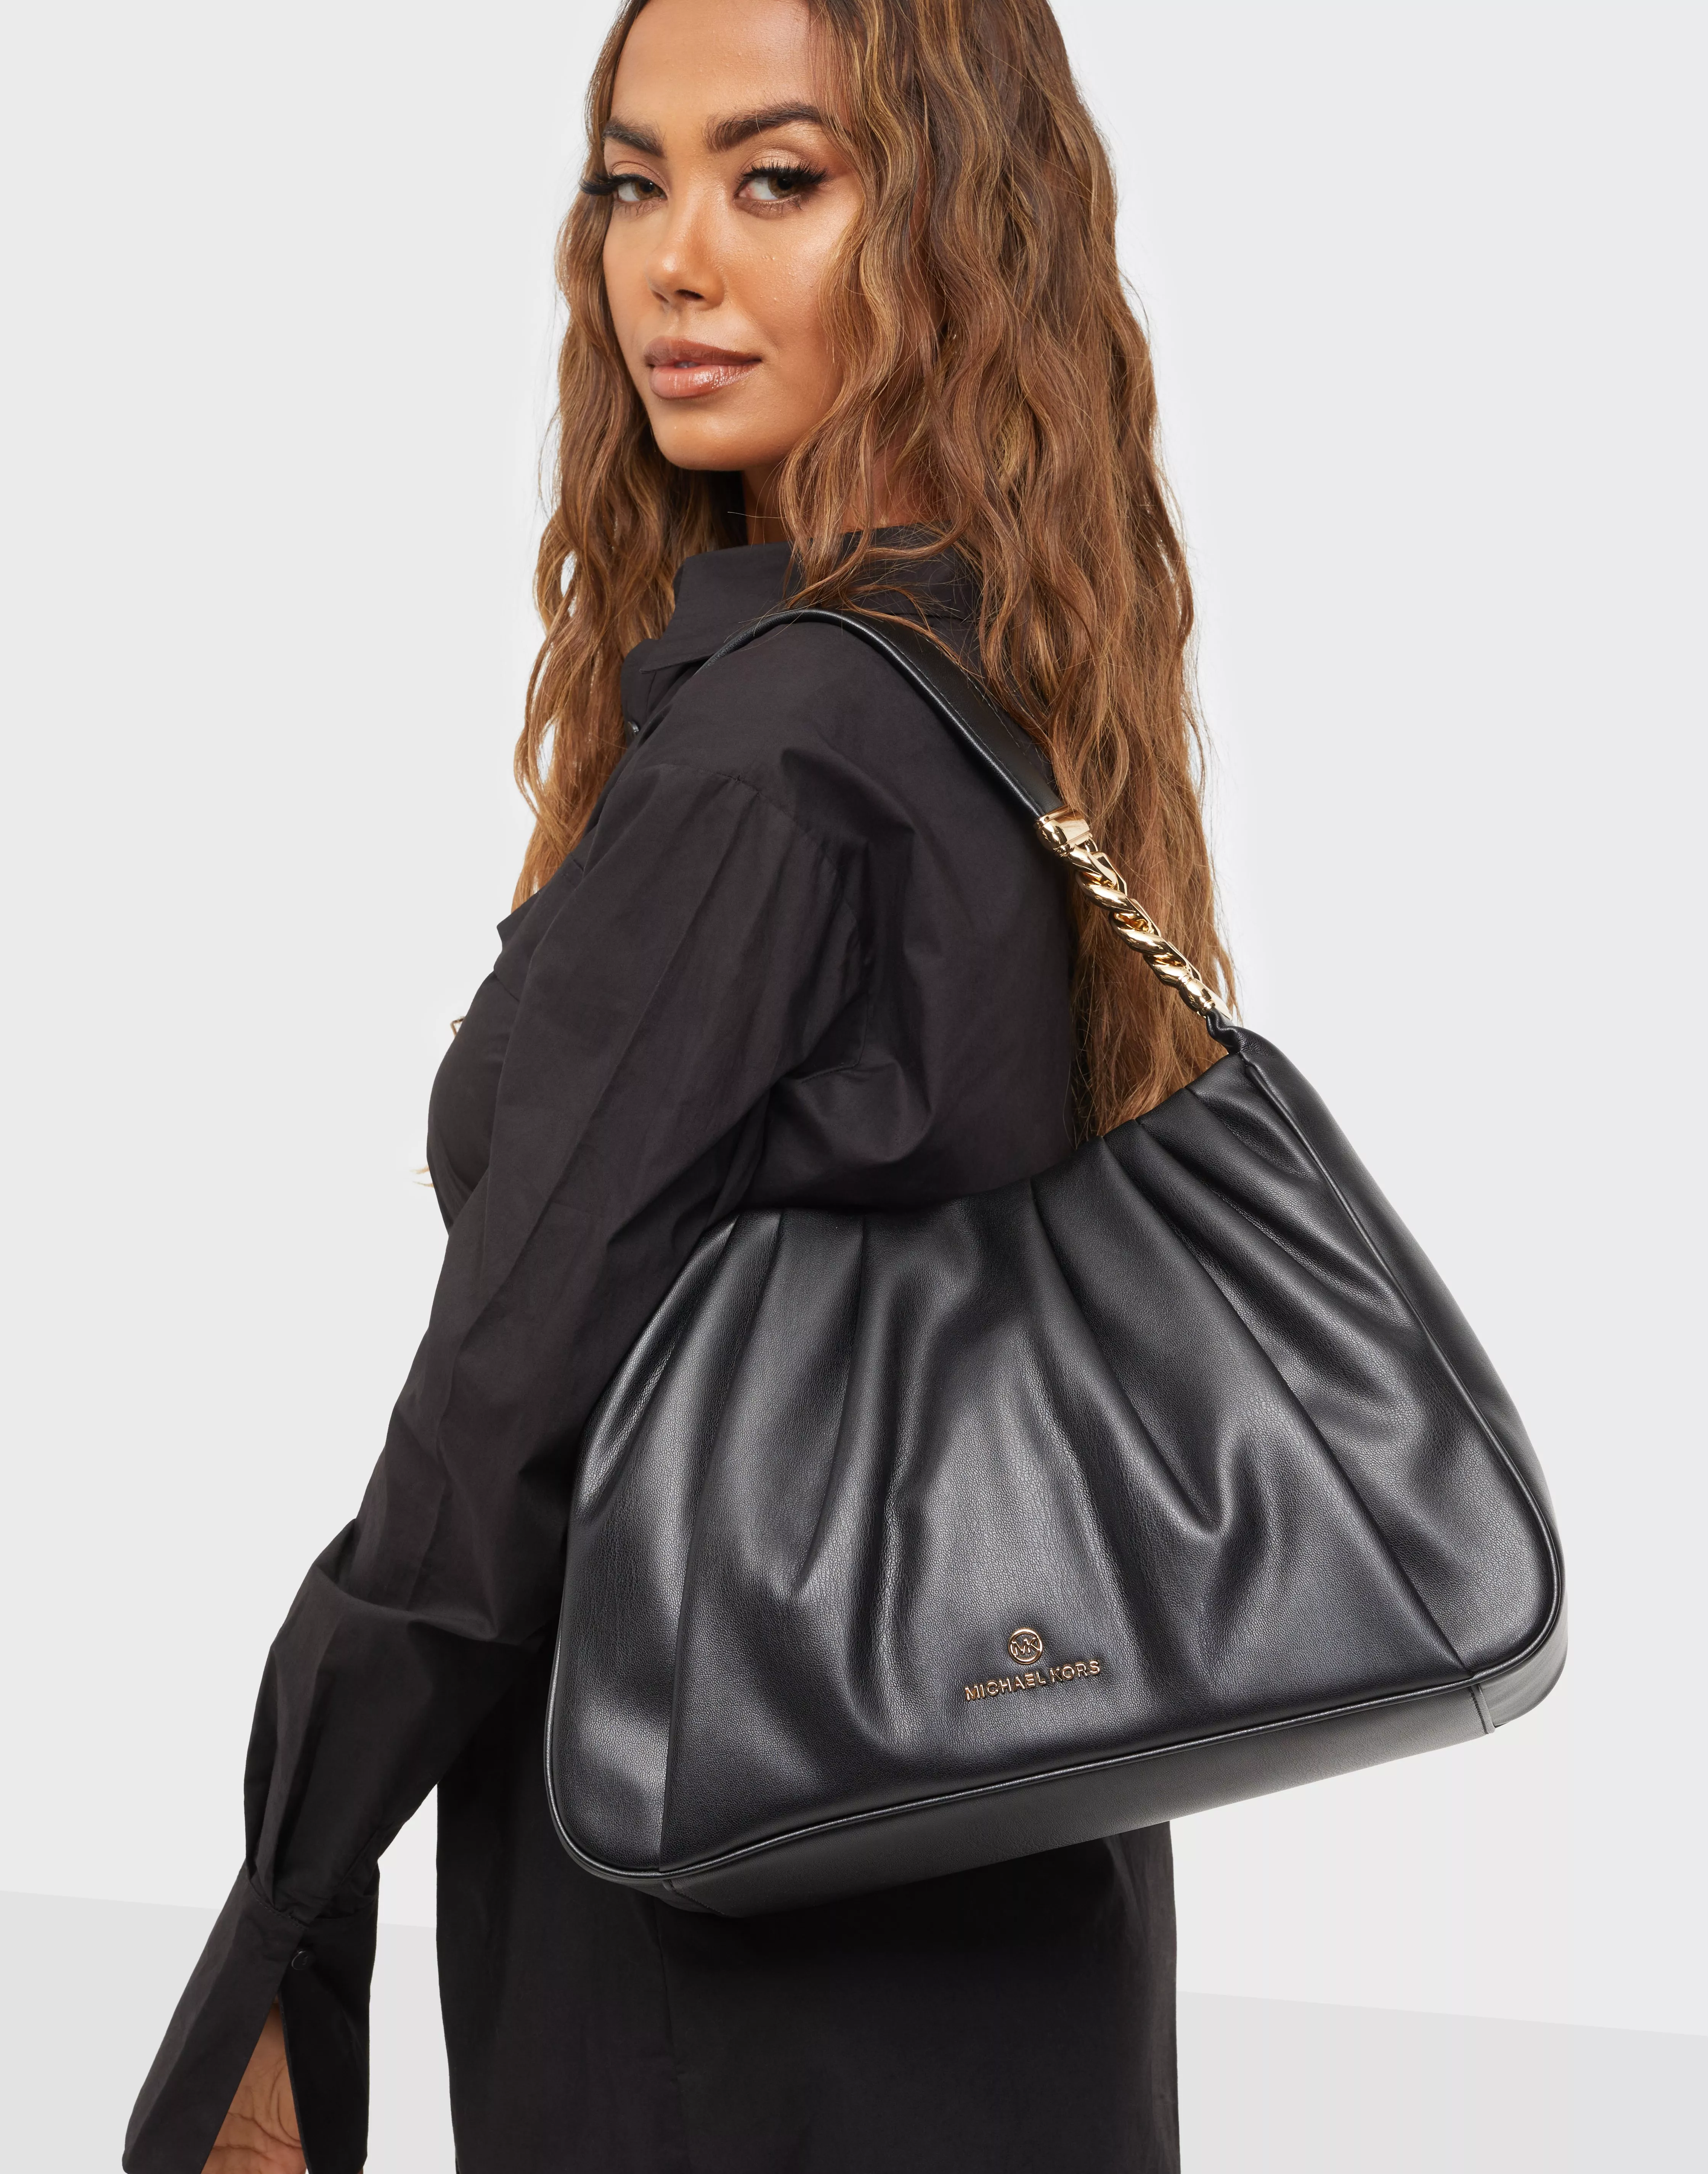 Buy Michael Kors Hannah Shoulder Bag - Black 